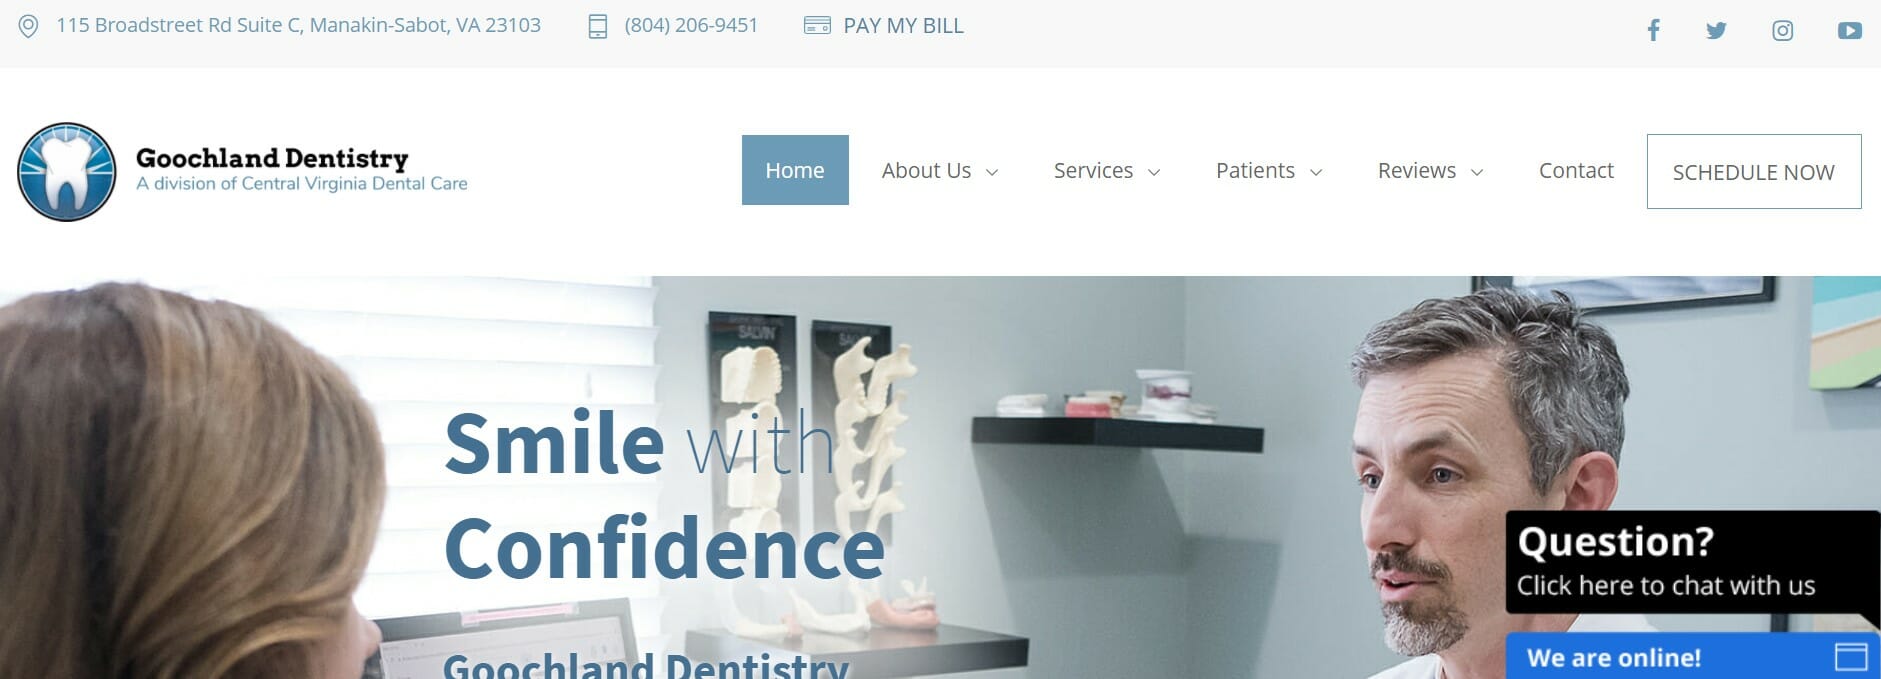 Live Website Chat on Goochland Dentistry's website